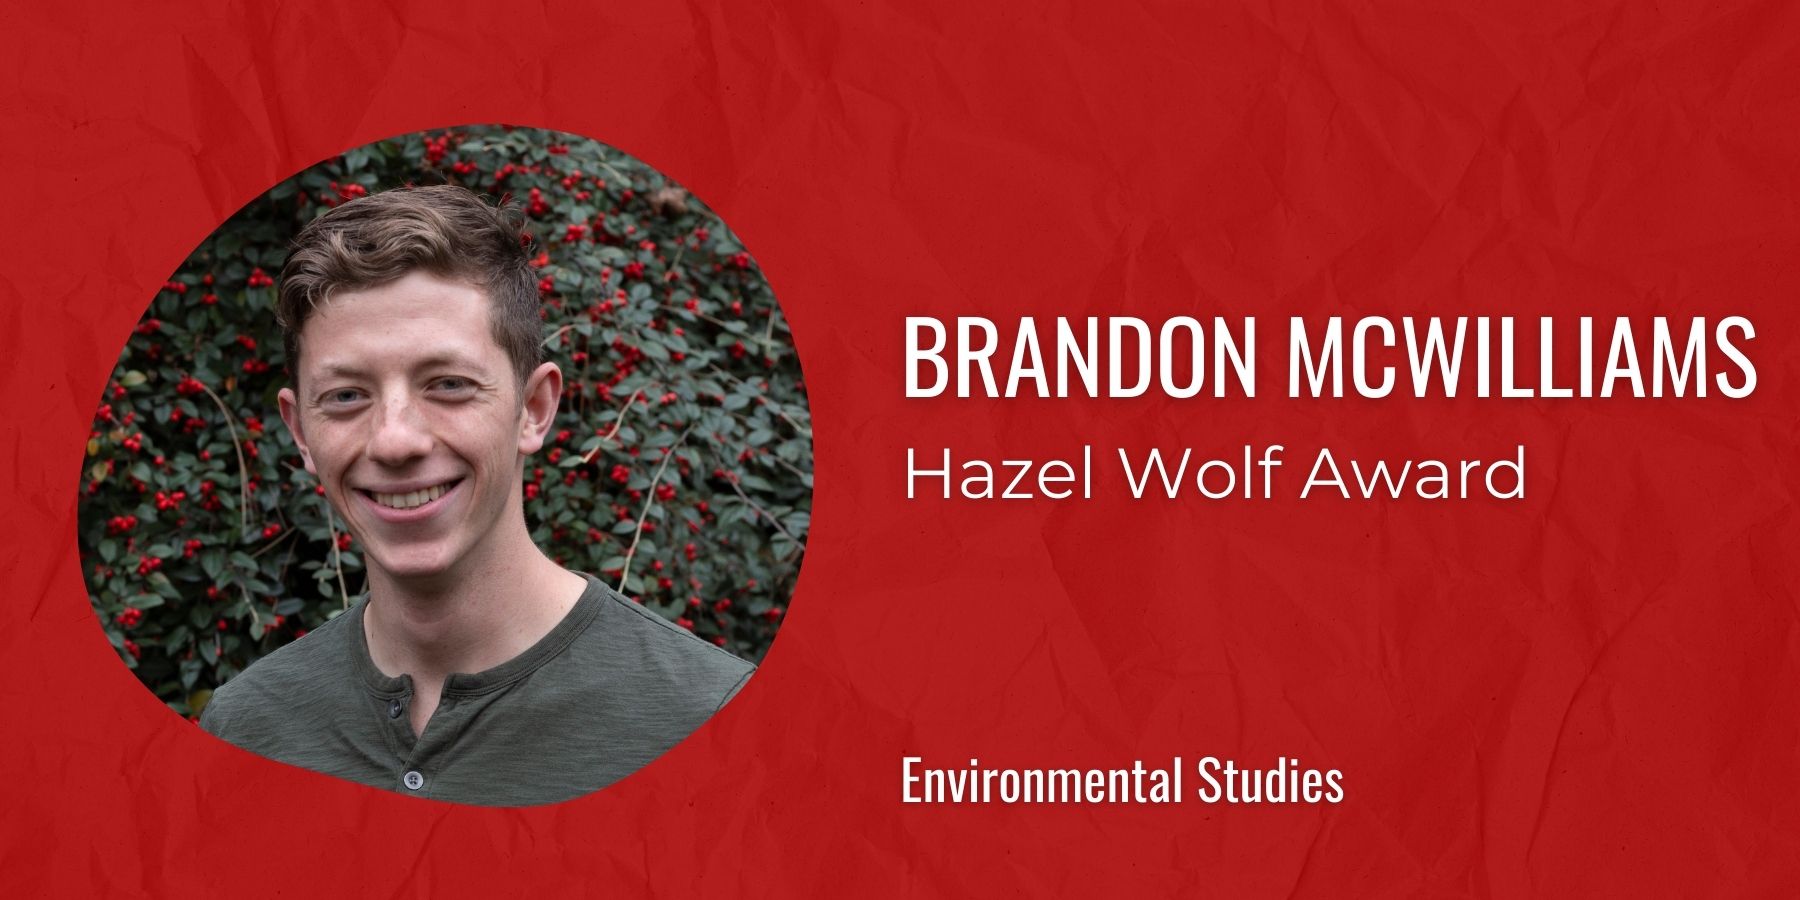 Brandon McWilliams with text: Hazel Wolf Award, Environmental Studies
